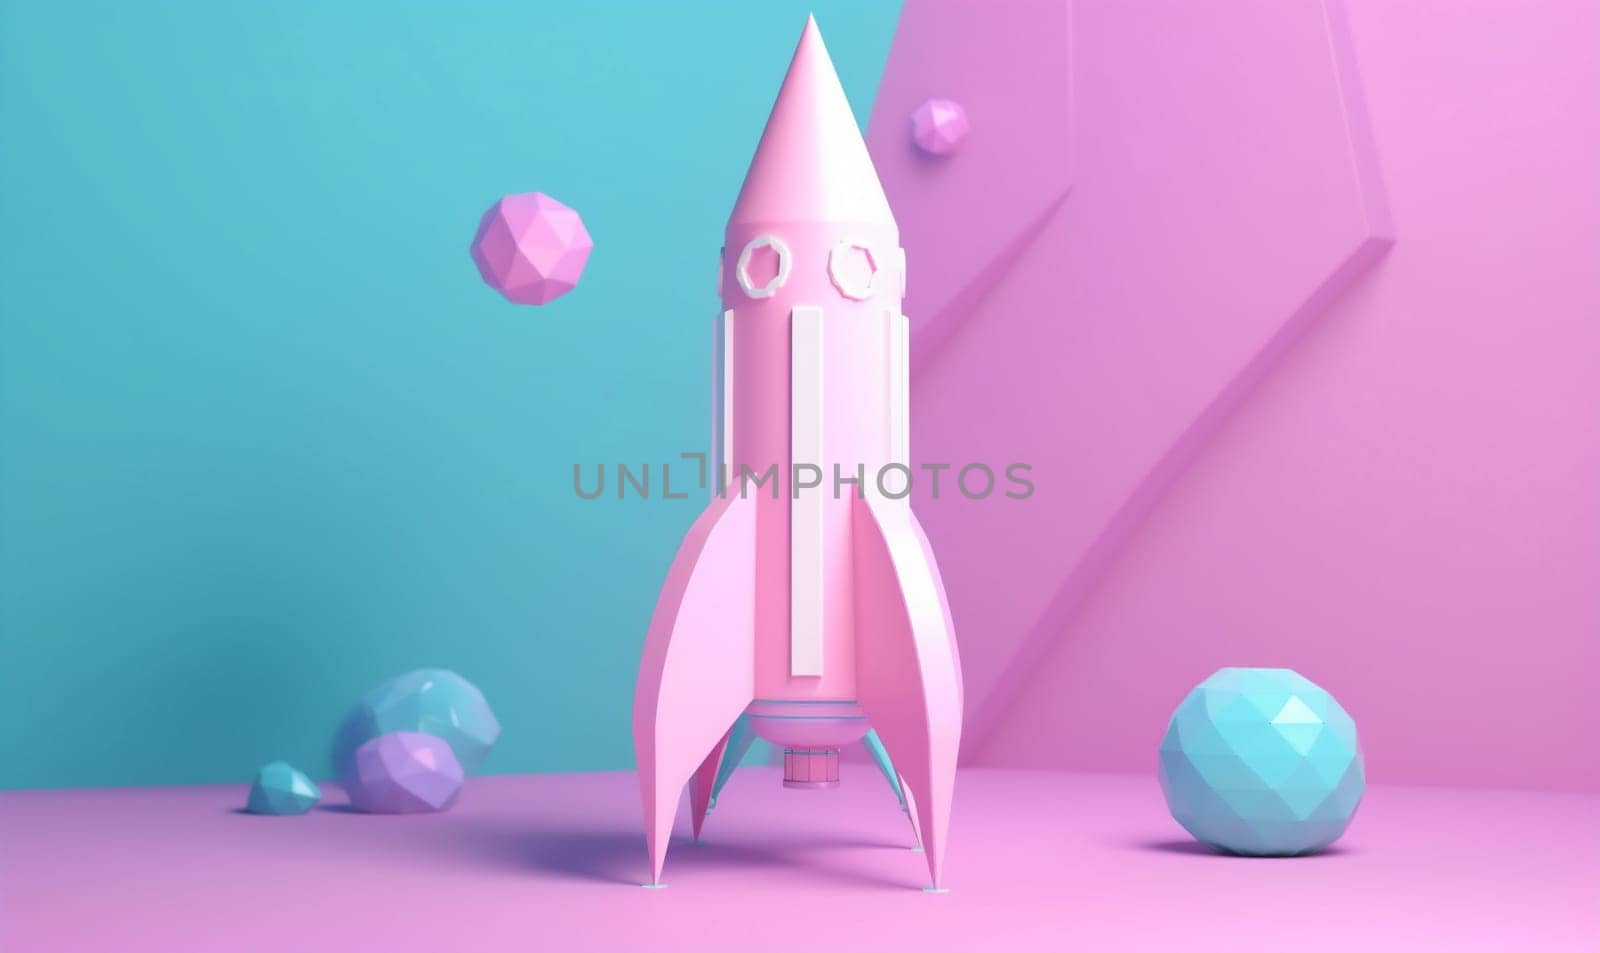 space bitcoin spaceship moon take target spacecraft launch technology future idea off cartoon digital pink business finance startup rocket education start. Generative AI.